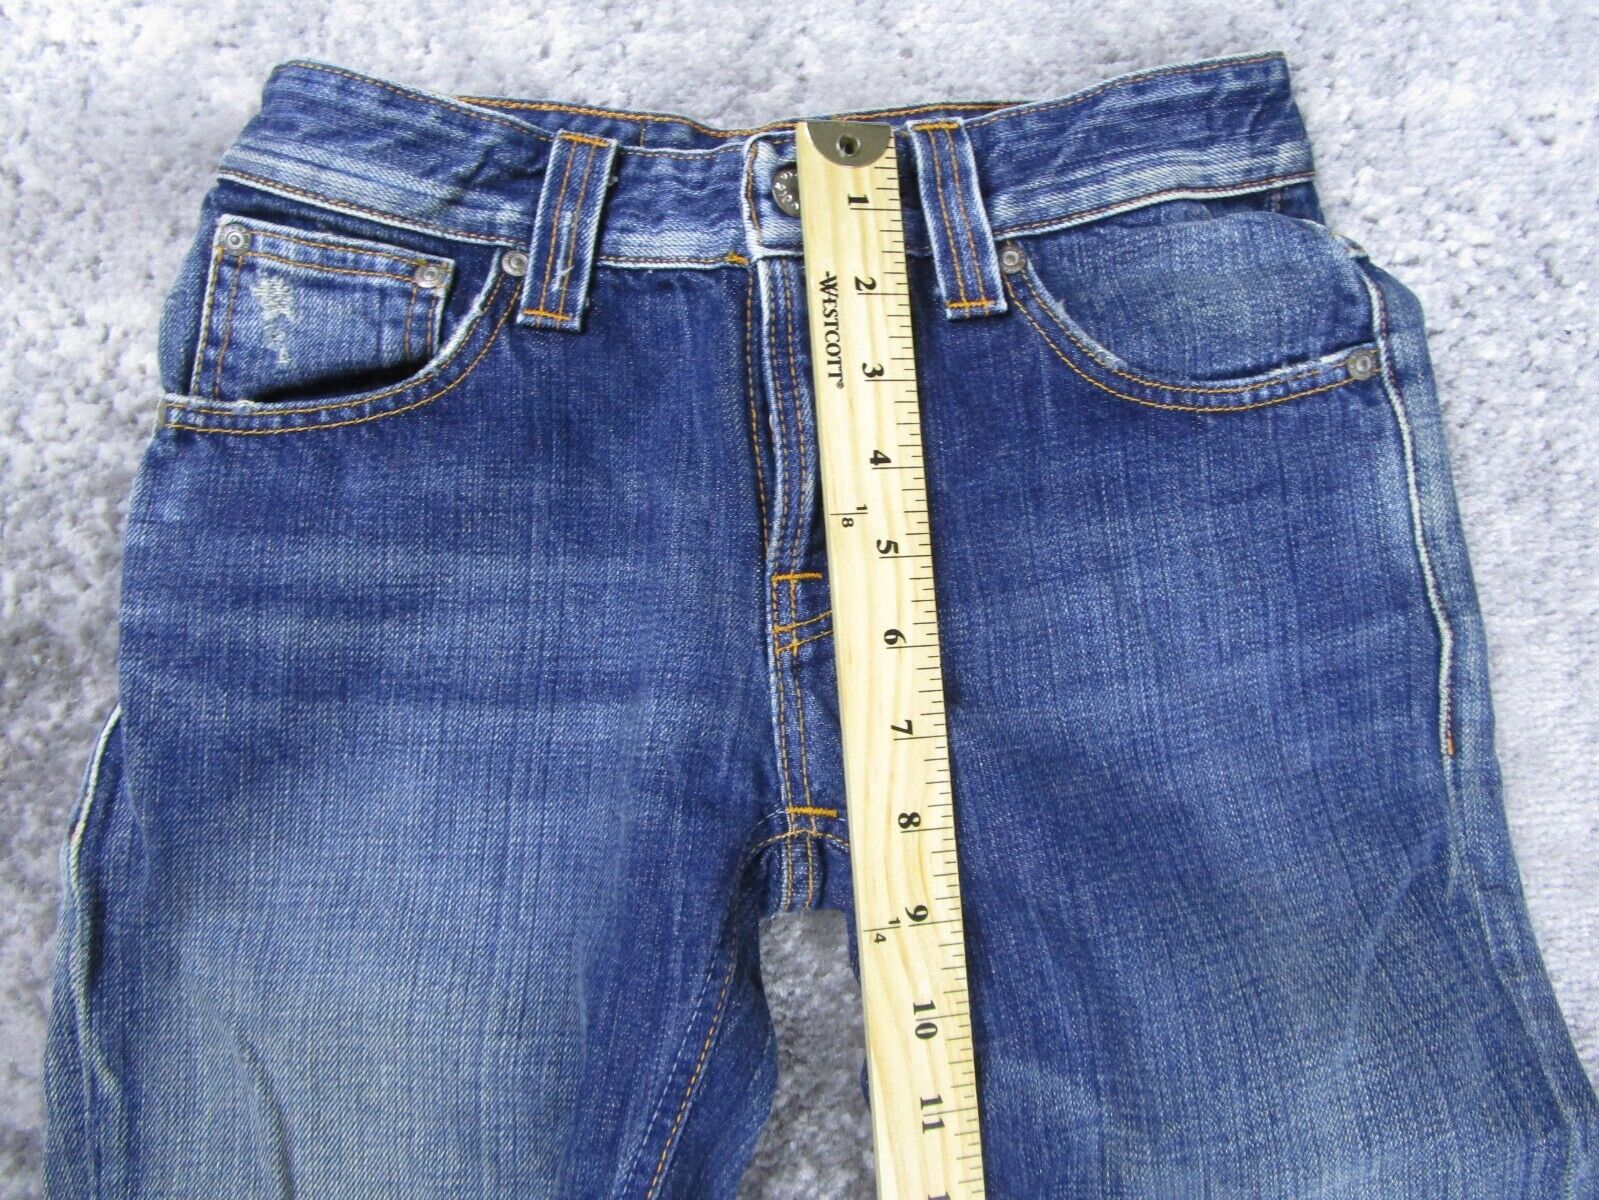 Nudie Jeans Co. Bootcut Ola Blue Jeans Unisex 26x32 Dark Wash Denim Pants  Casual